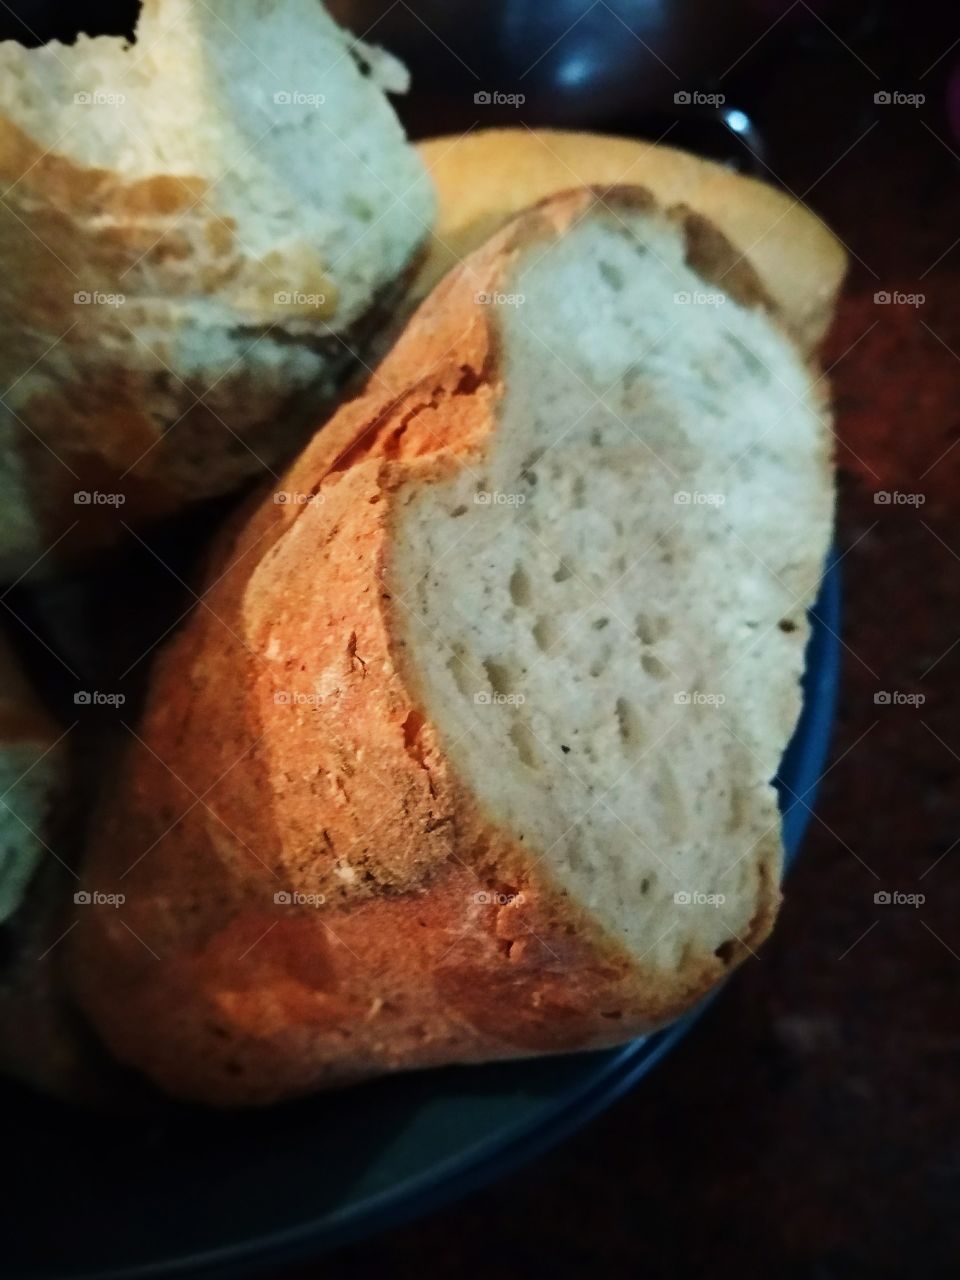 mmmm bread